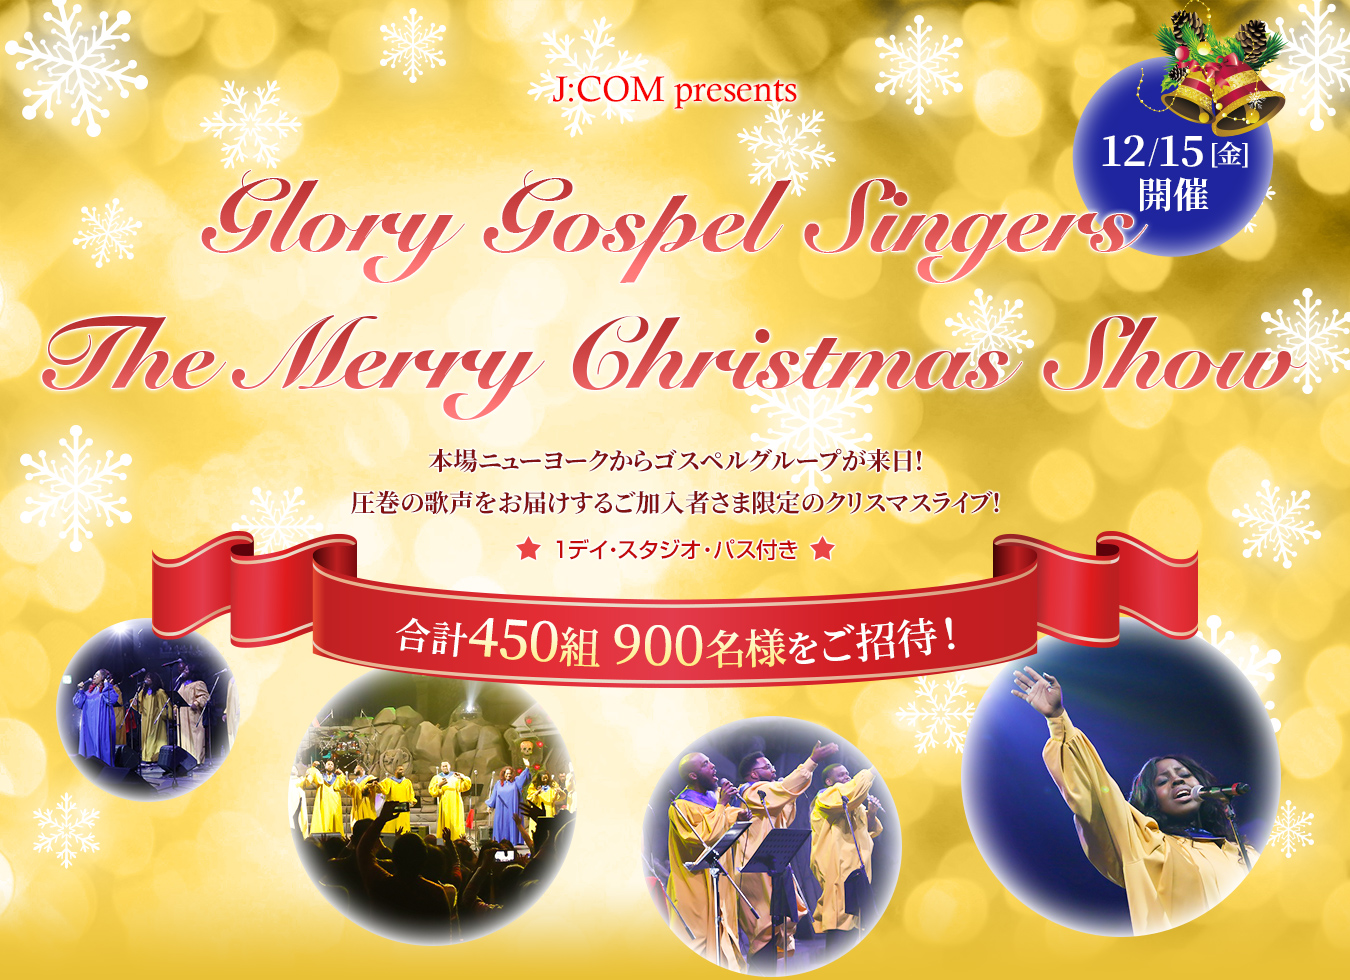 J:COM presents 12/15[金]開催 Glory Gospel Singers The Merry Christmas Show 本場ニューヨークからゴスペルグループが来日！圧巻の歌声をお届けするご加入者様限定のクリスマスライブ！ 1デイ・スタジオ・パス付き 合計450組 900名様をご招待！